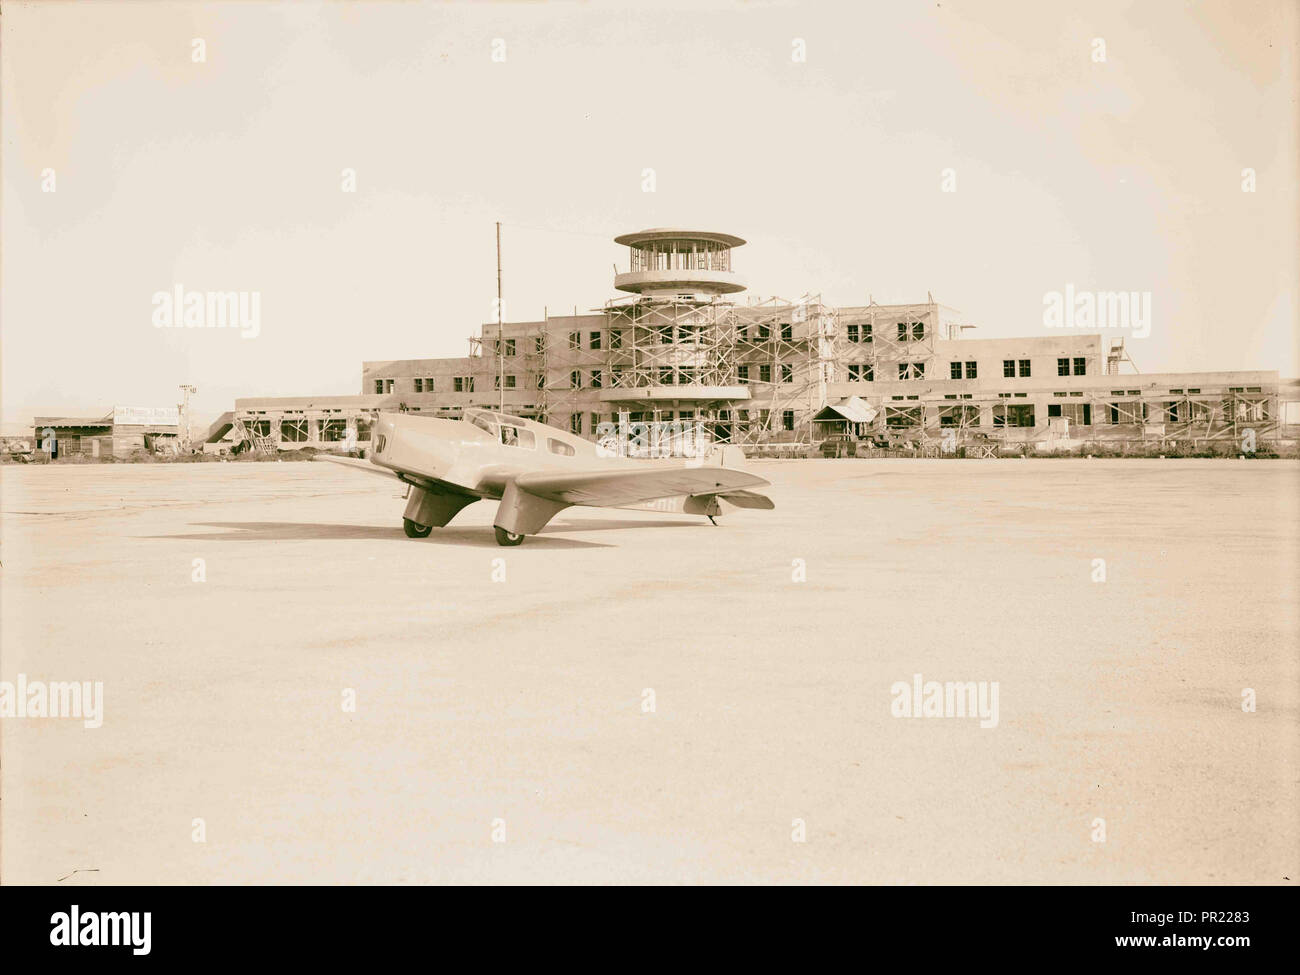 https://c8.alamy.com/comp/PR2283/lydda-airport-airport-building-in-construction-1934-israel-lod-PR2283.jpg